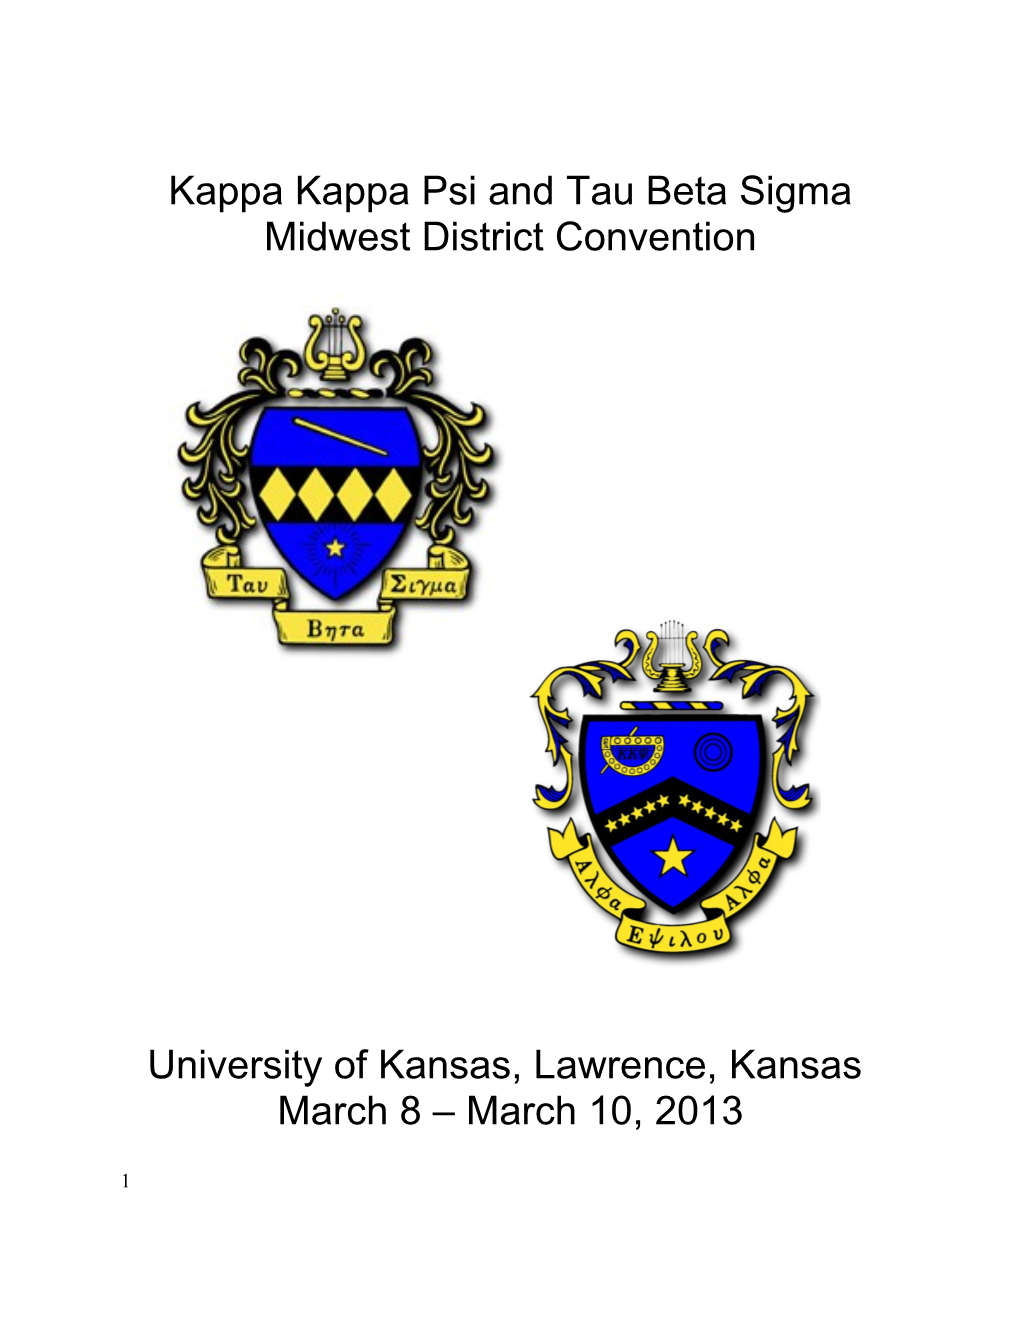 Kappa Kappa Psi and Tau Beta Sigma Midwest District Convention